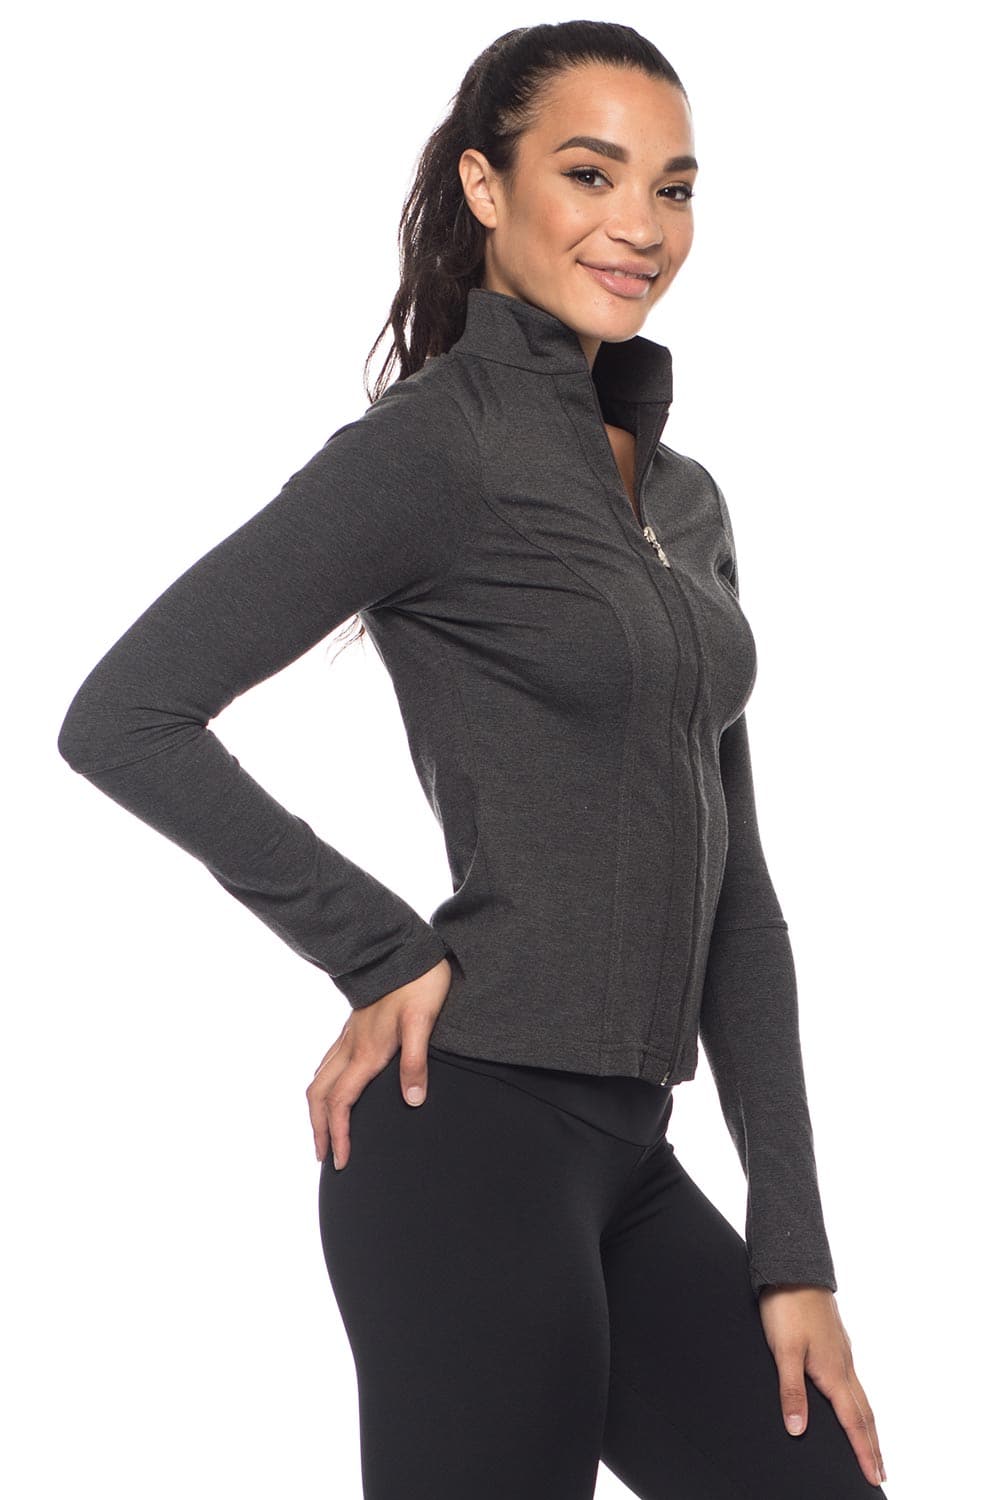 Sandra McCray Flat Fitted Jacket - Evolve Fit Wear